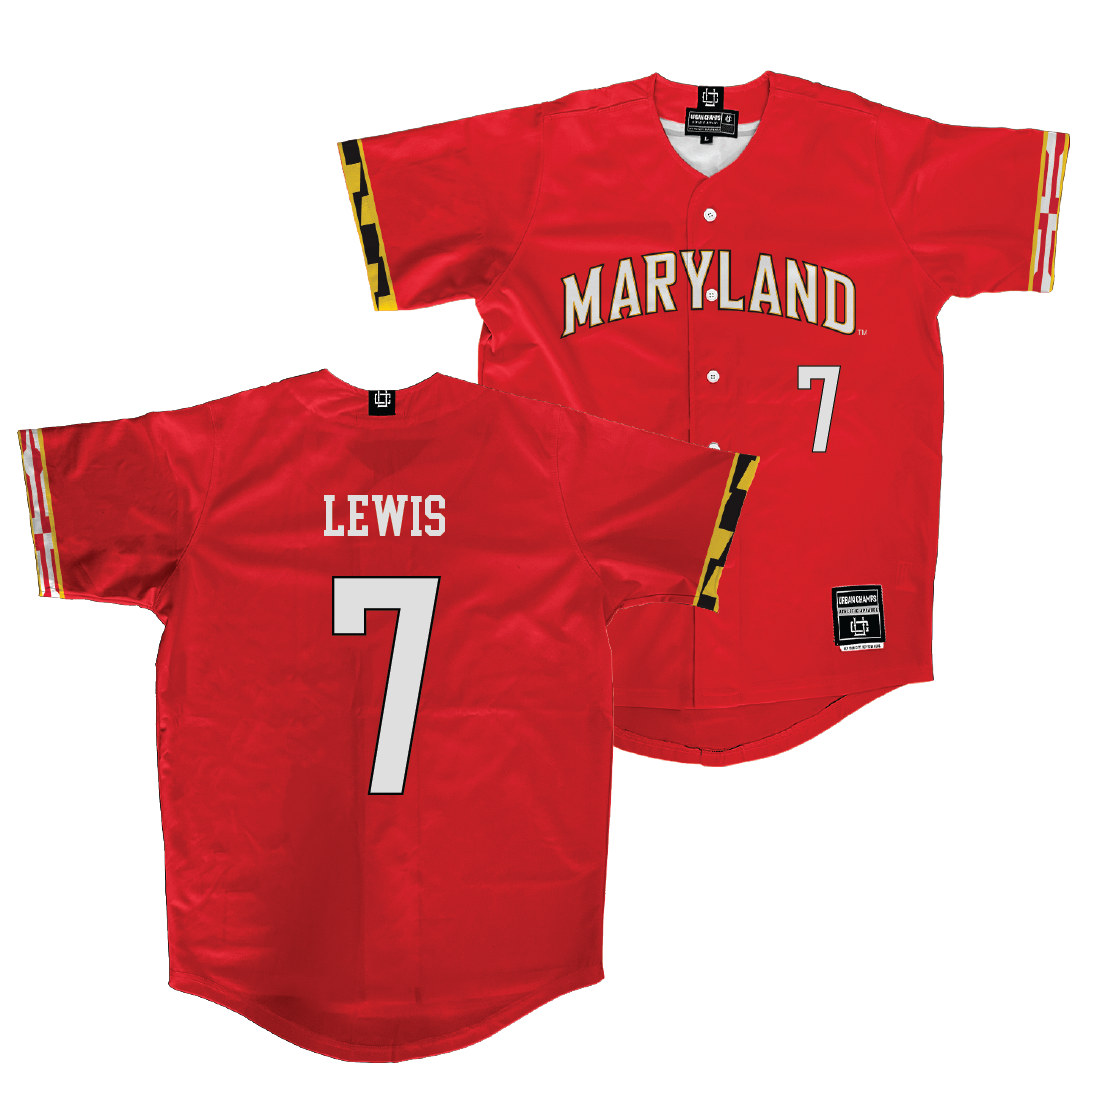 Maryland Softball Red Jersey - Sydney Lewis